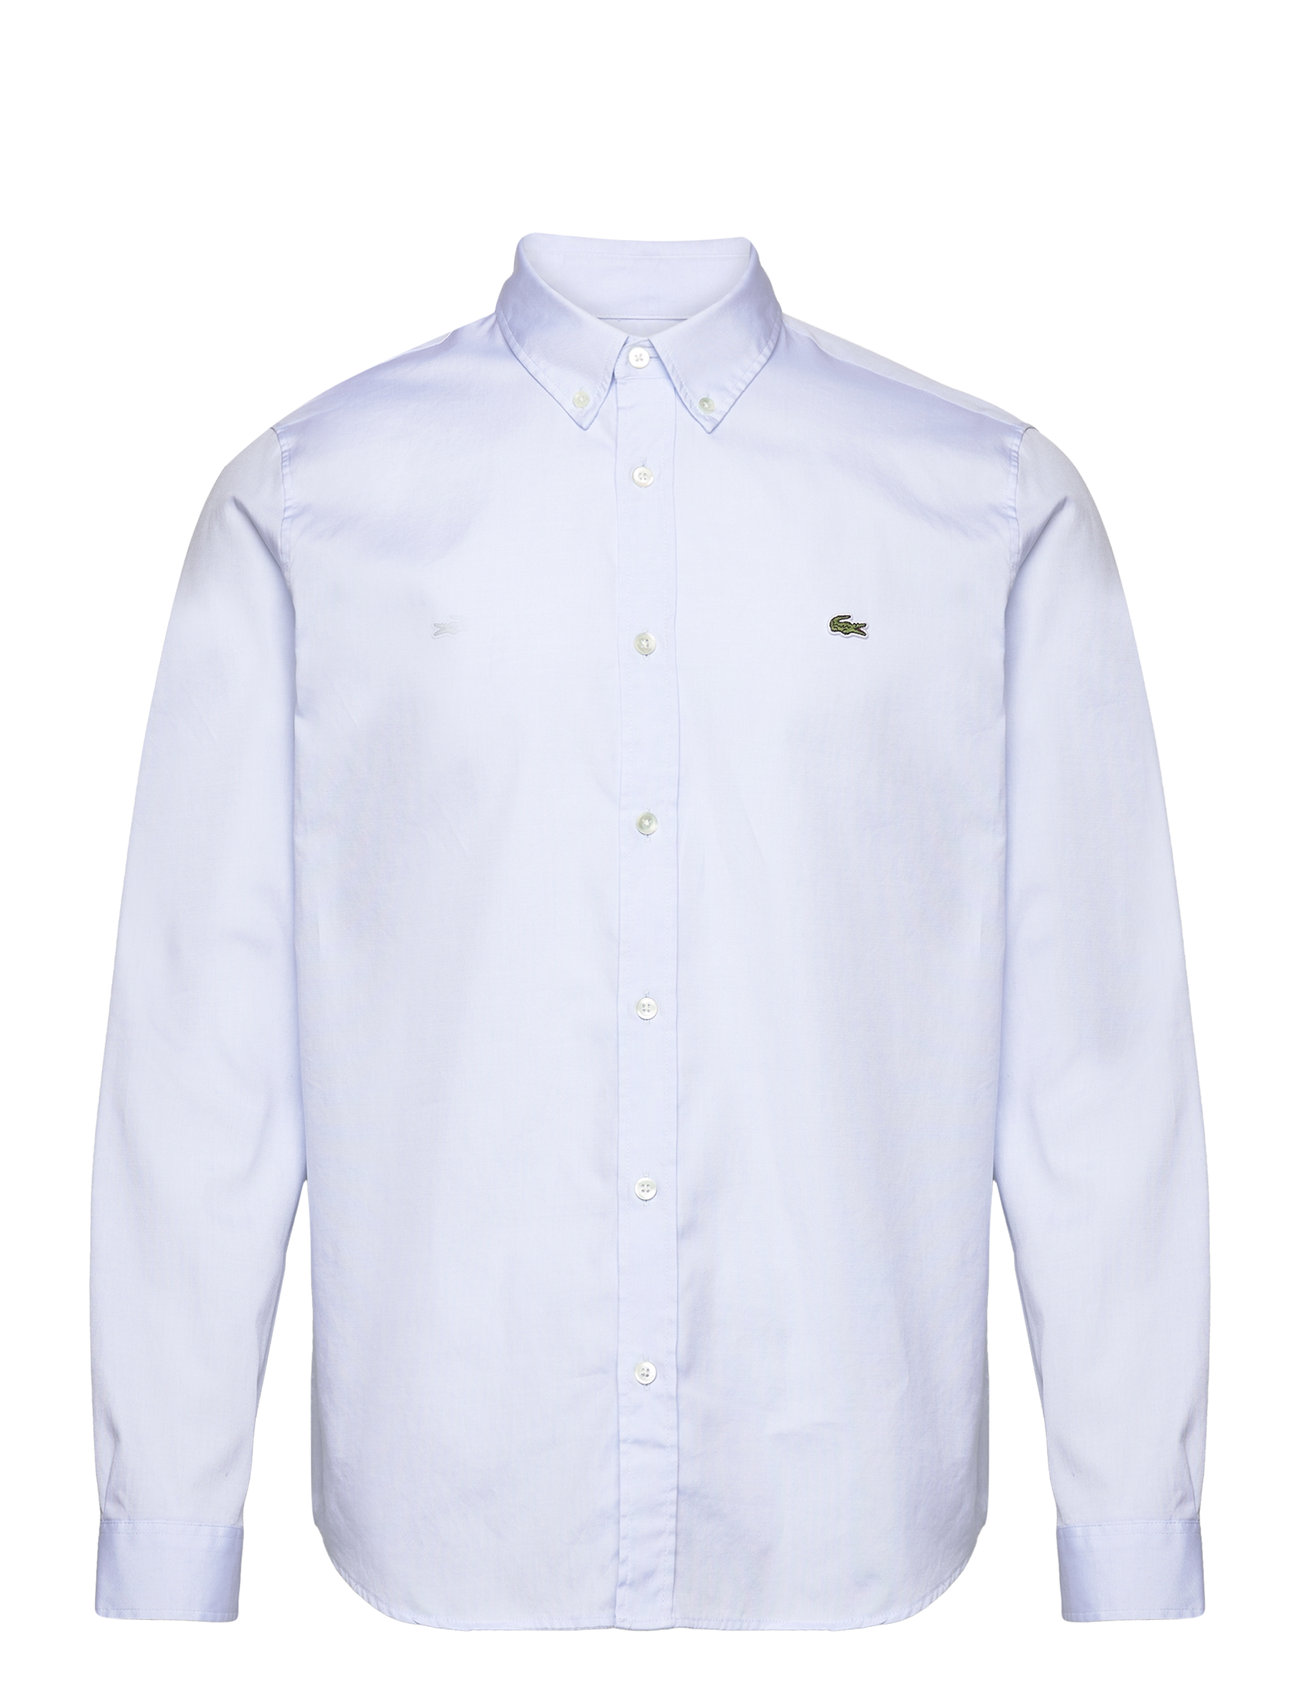 Lacoste Shirts Business skjorter - Boozt.com